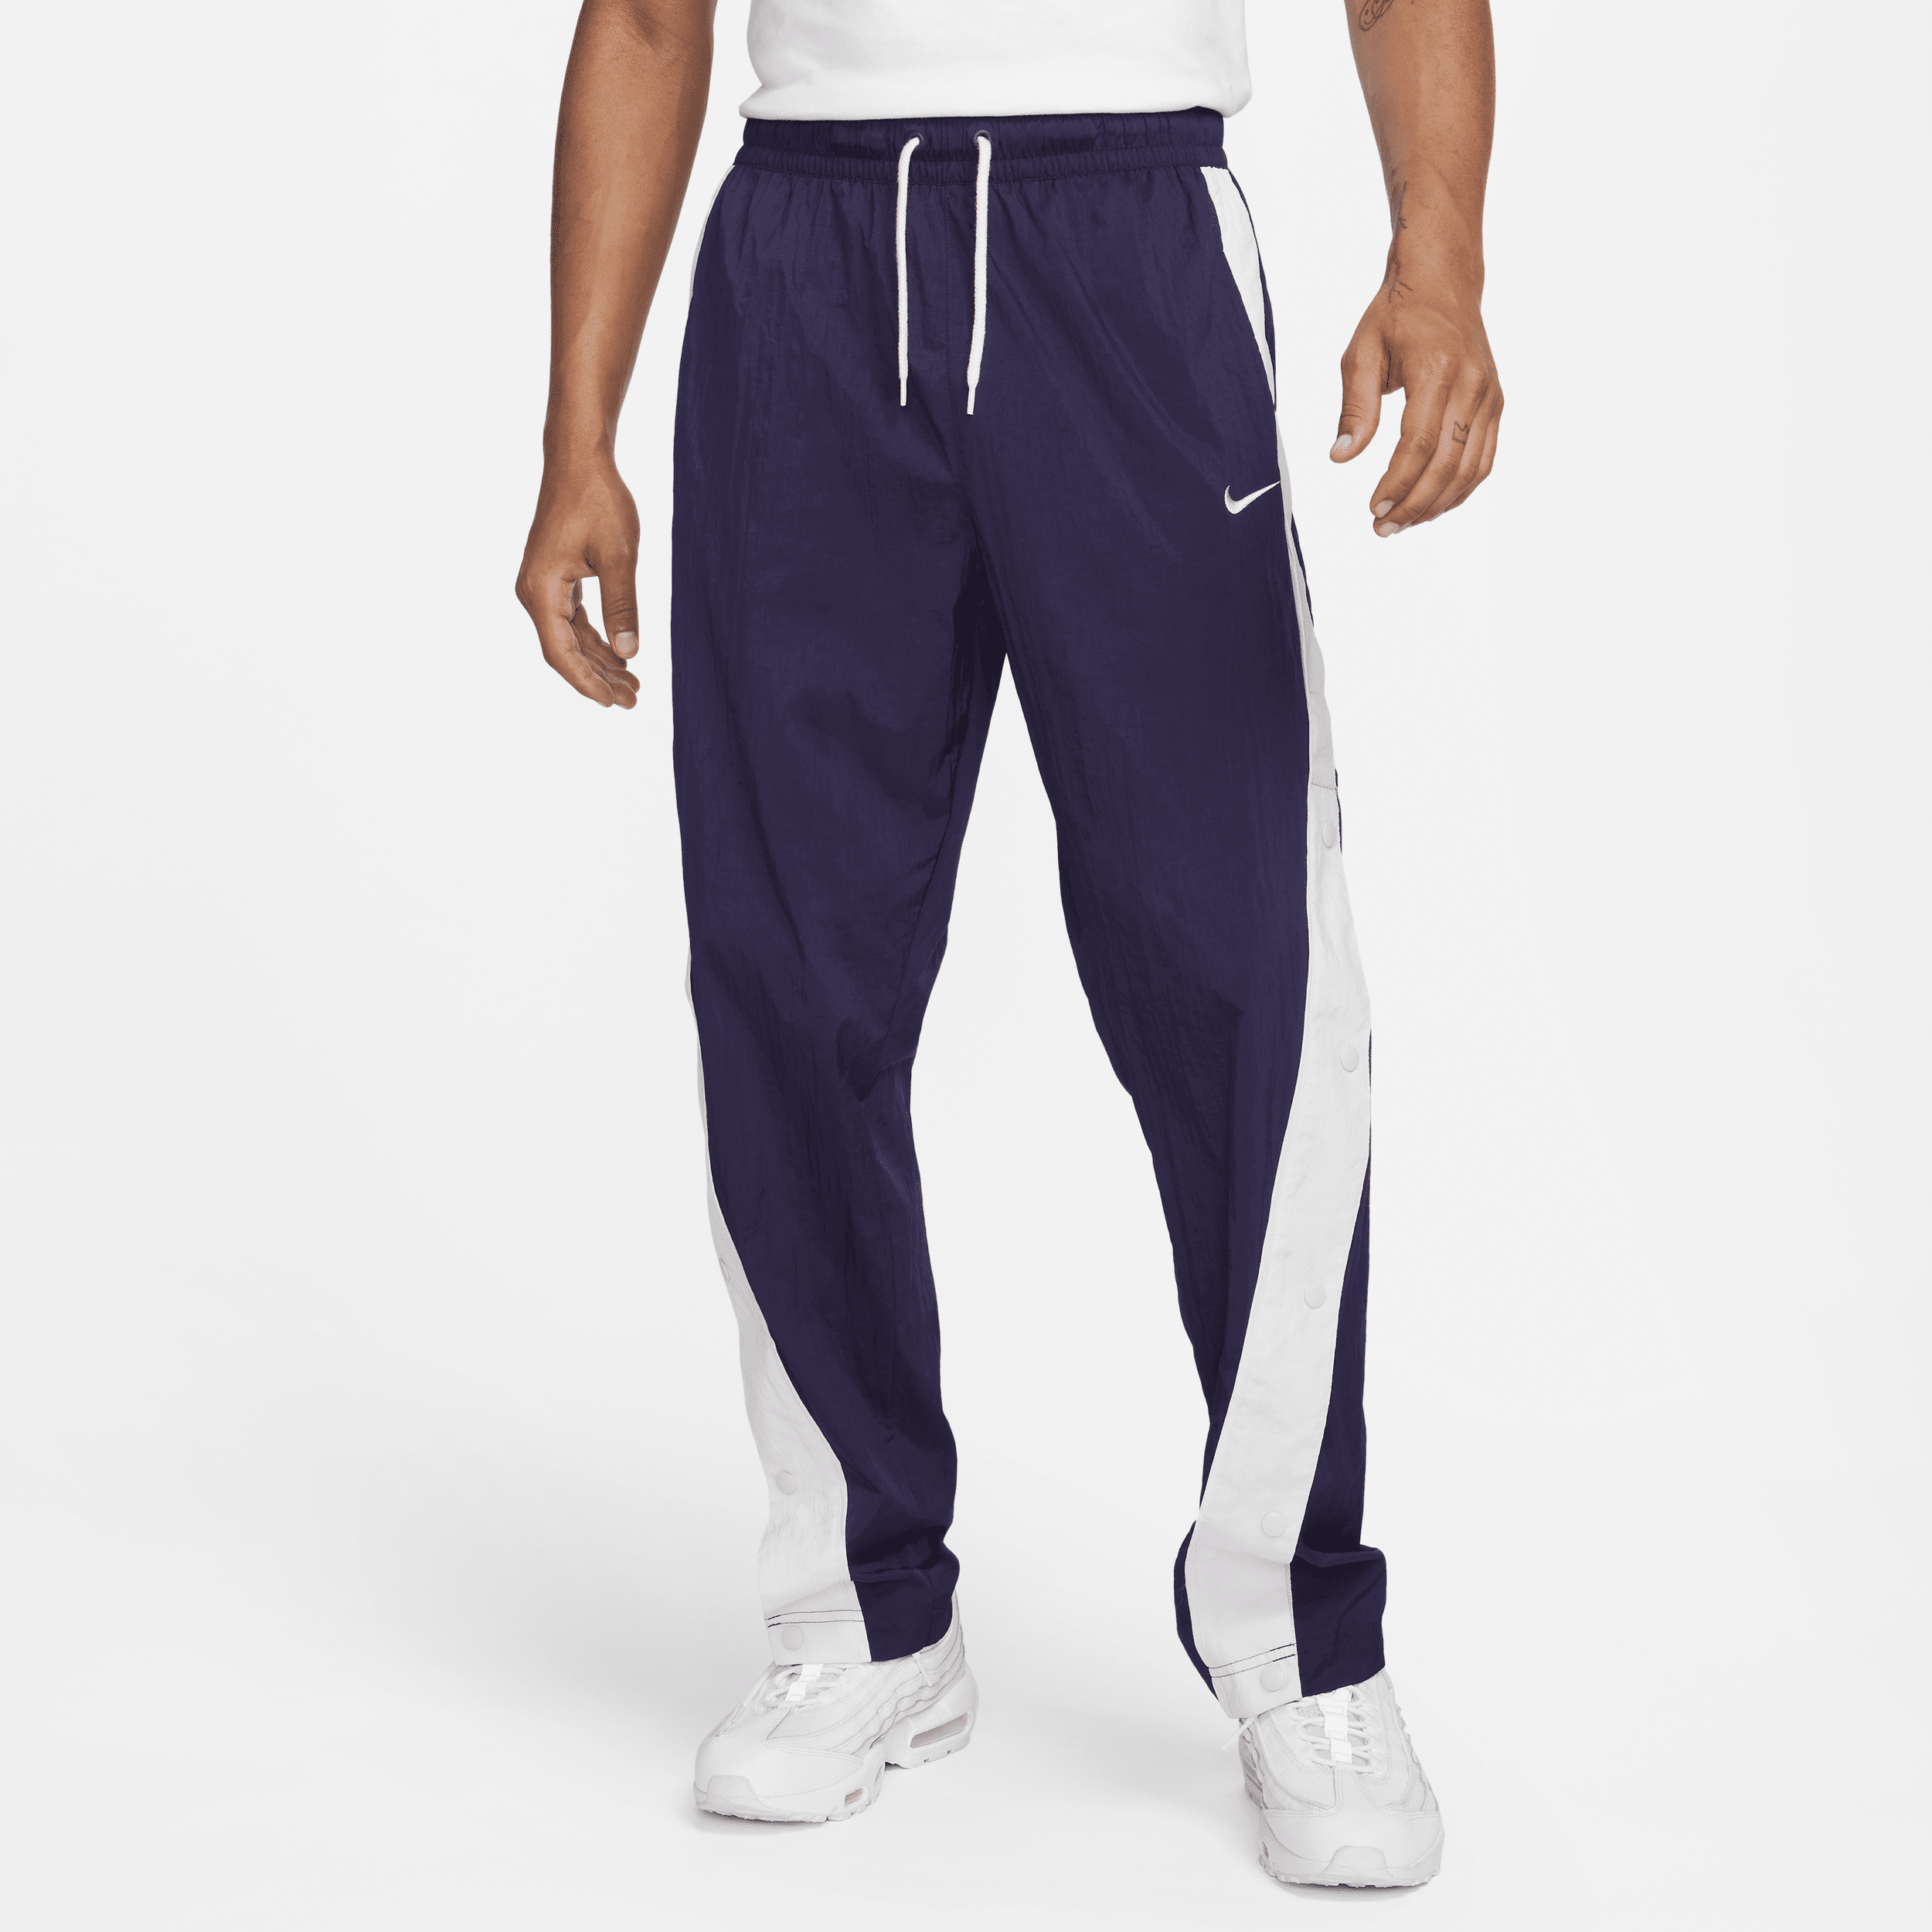 Pantaloni in tessuto da basket Nike - Uomo - Viola